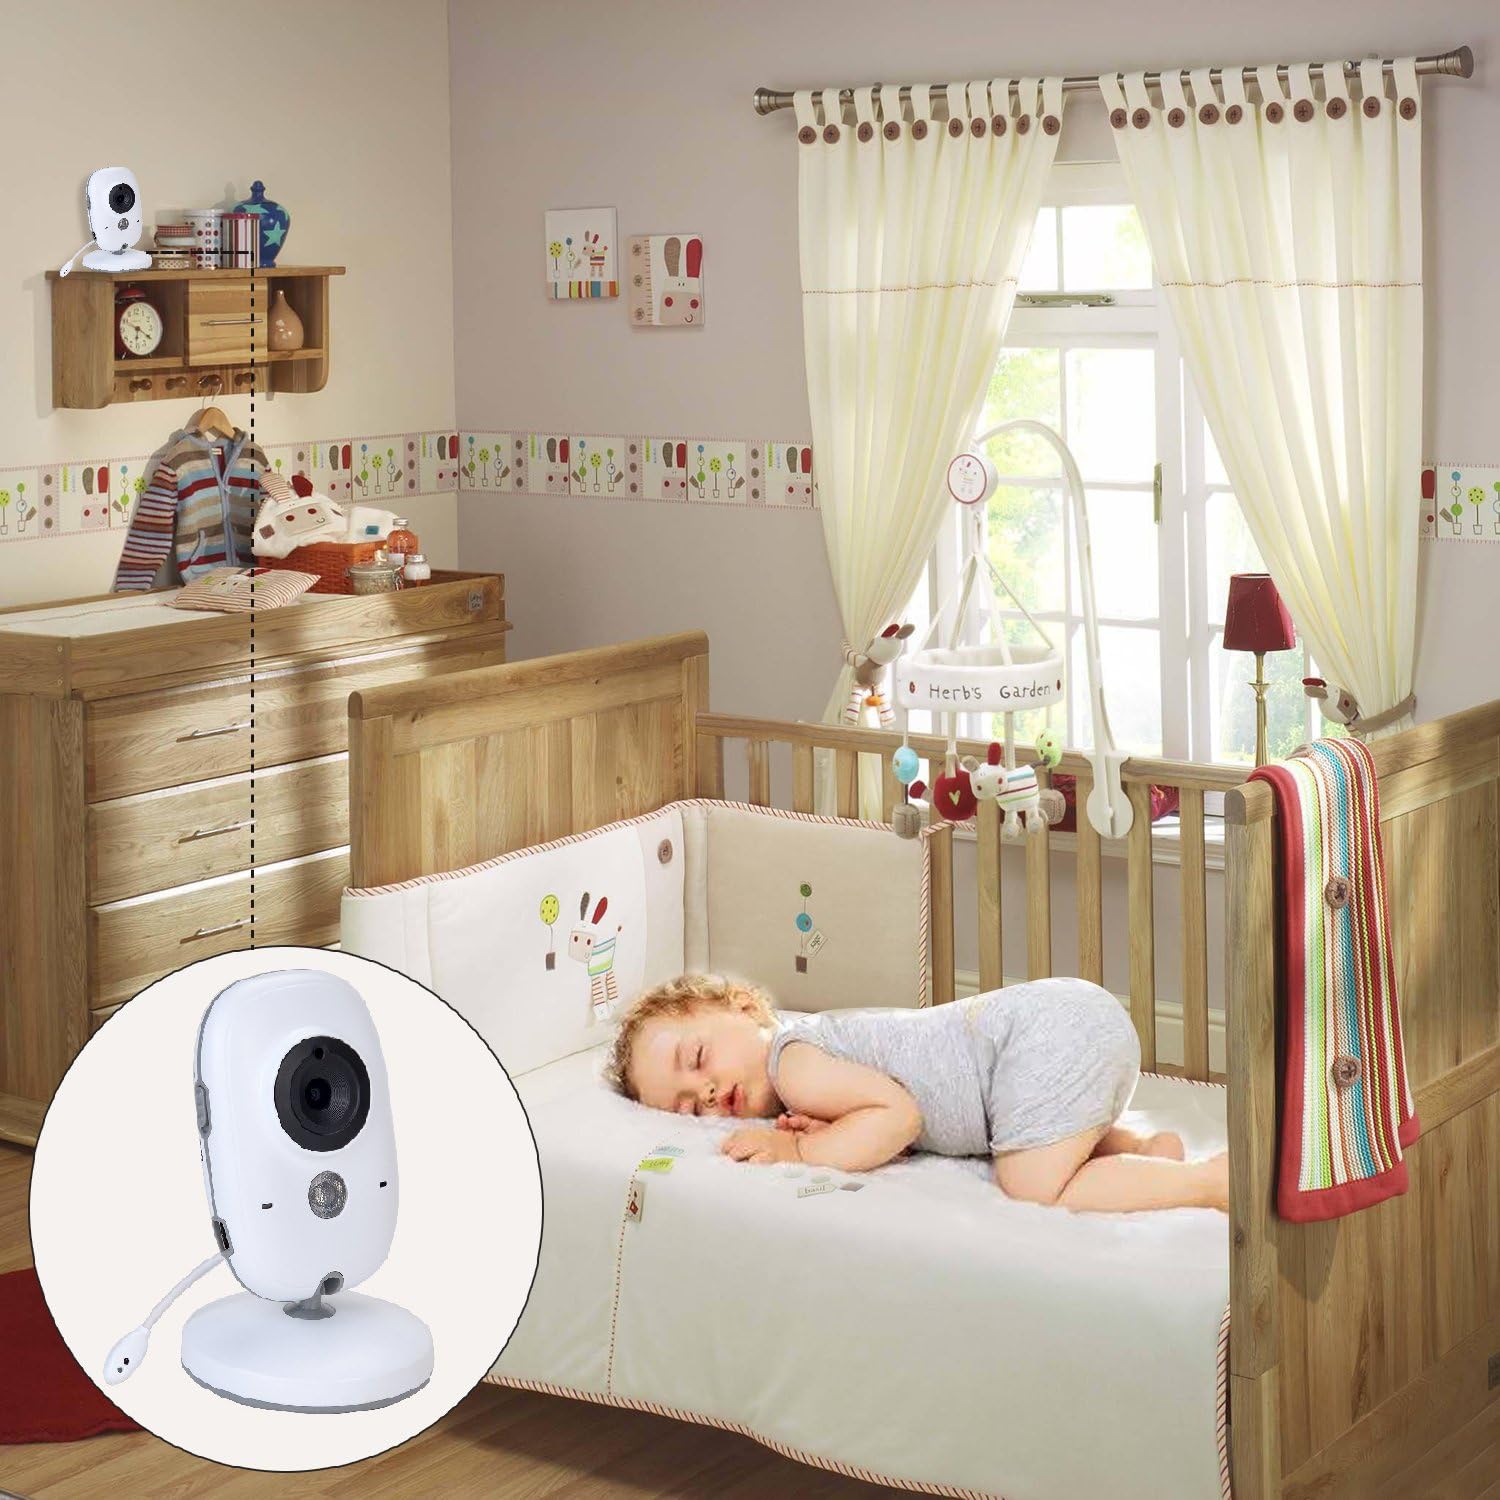 SecureBabyView™ 2.4G Wireless Video Baby Monitor